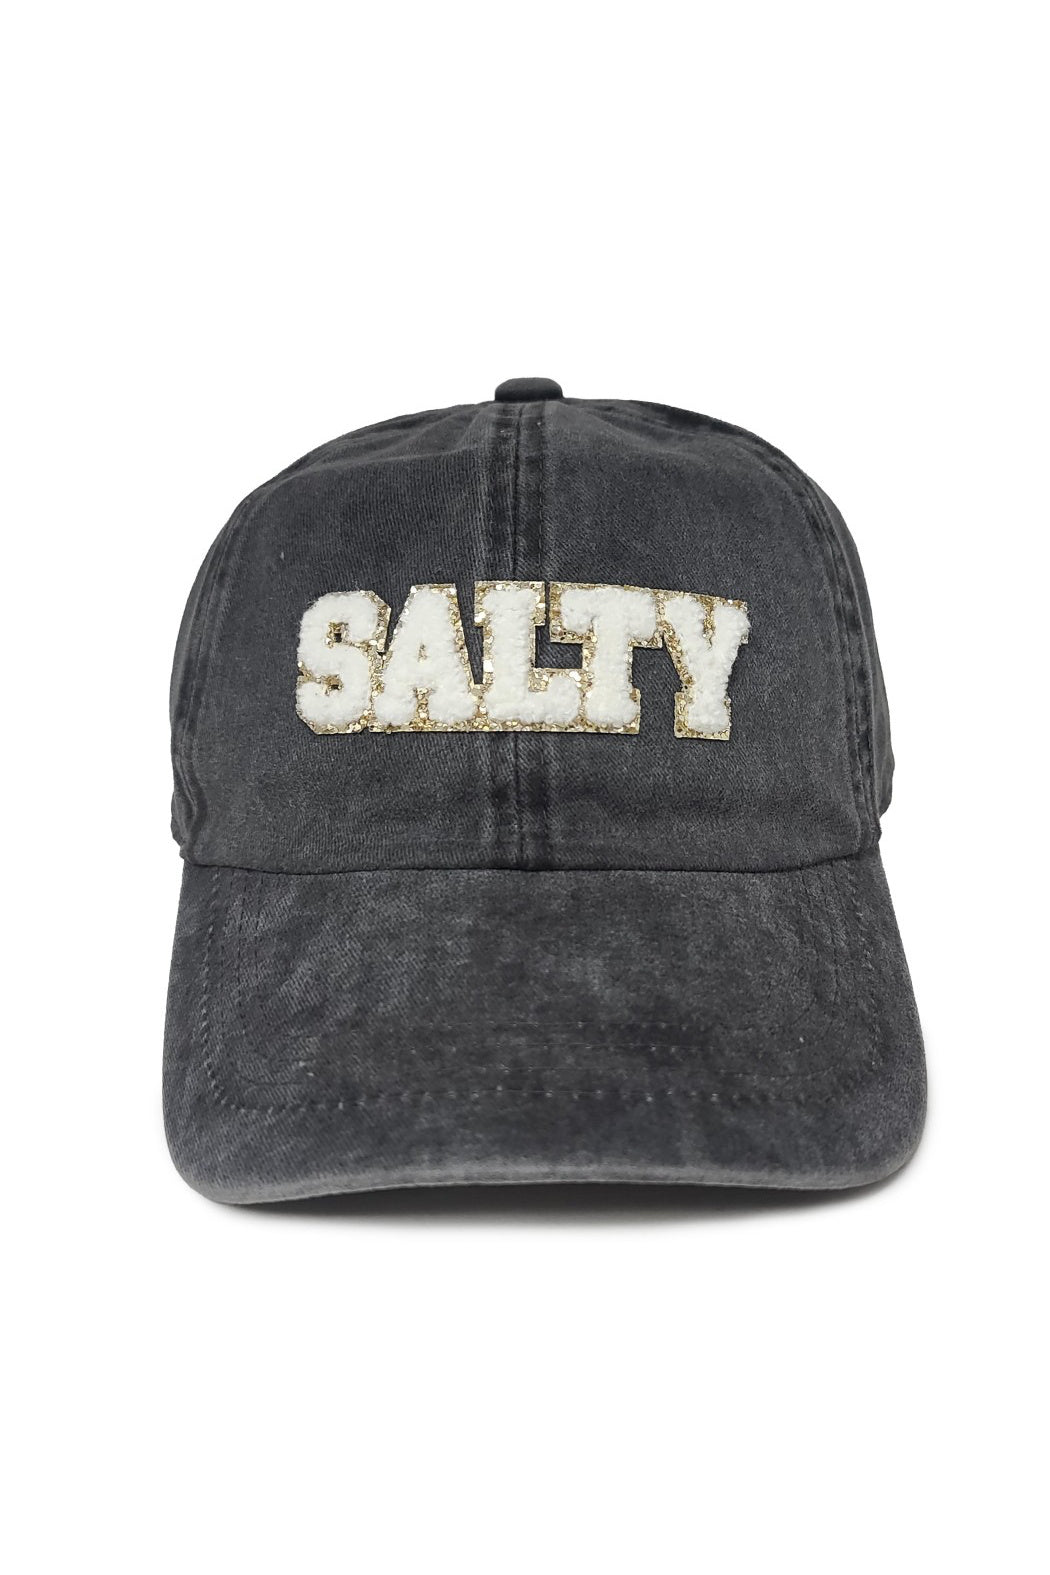 Chenille Glitz Salty Cap